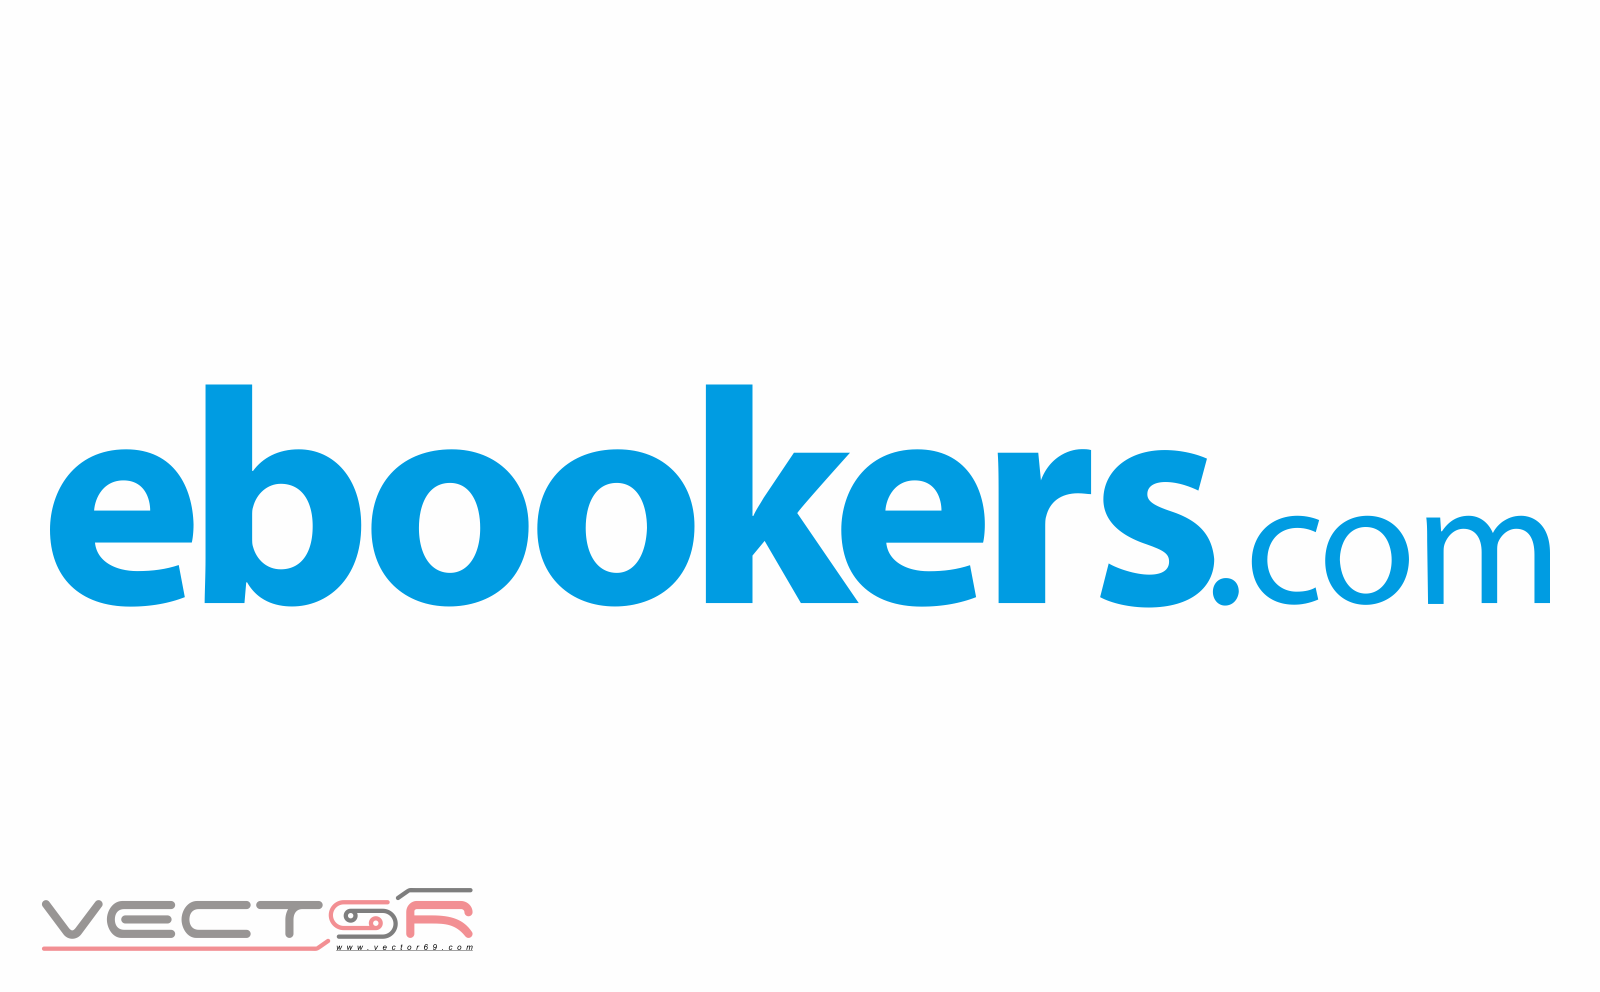 ebookers.com Logo - Download Transparent Images, Portable Network Graphics (.PNG)